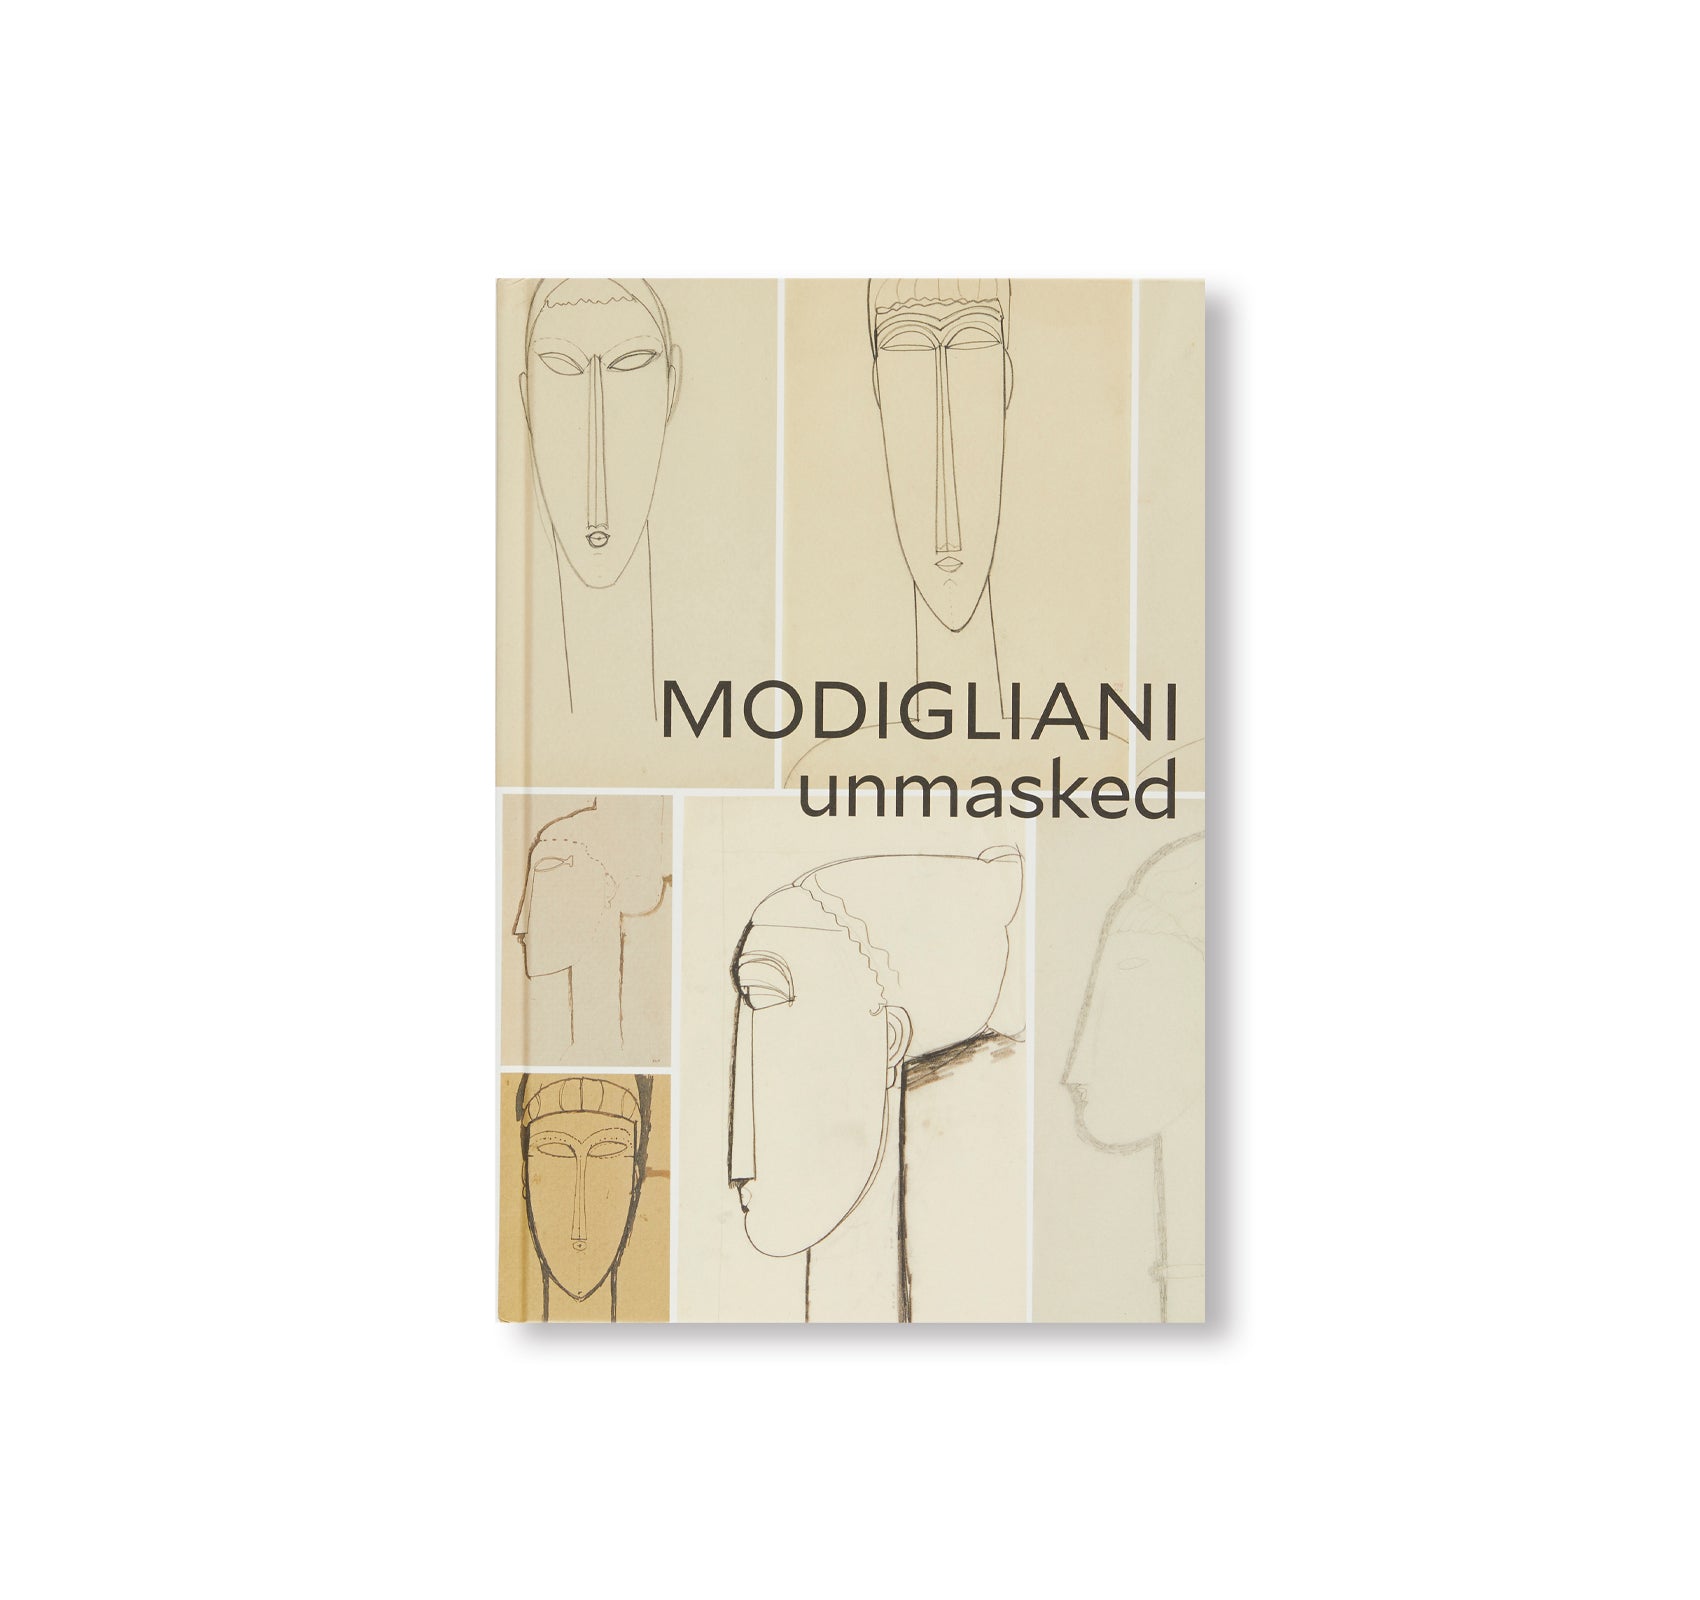 MODIGLIANI UNMASKED by Amedeo Modigliani